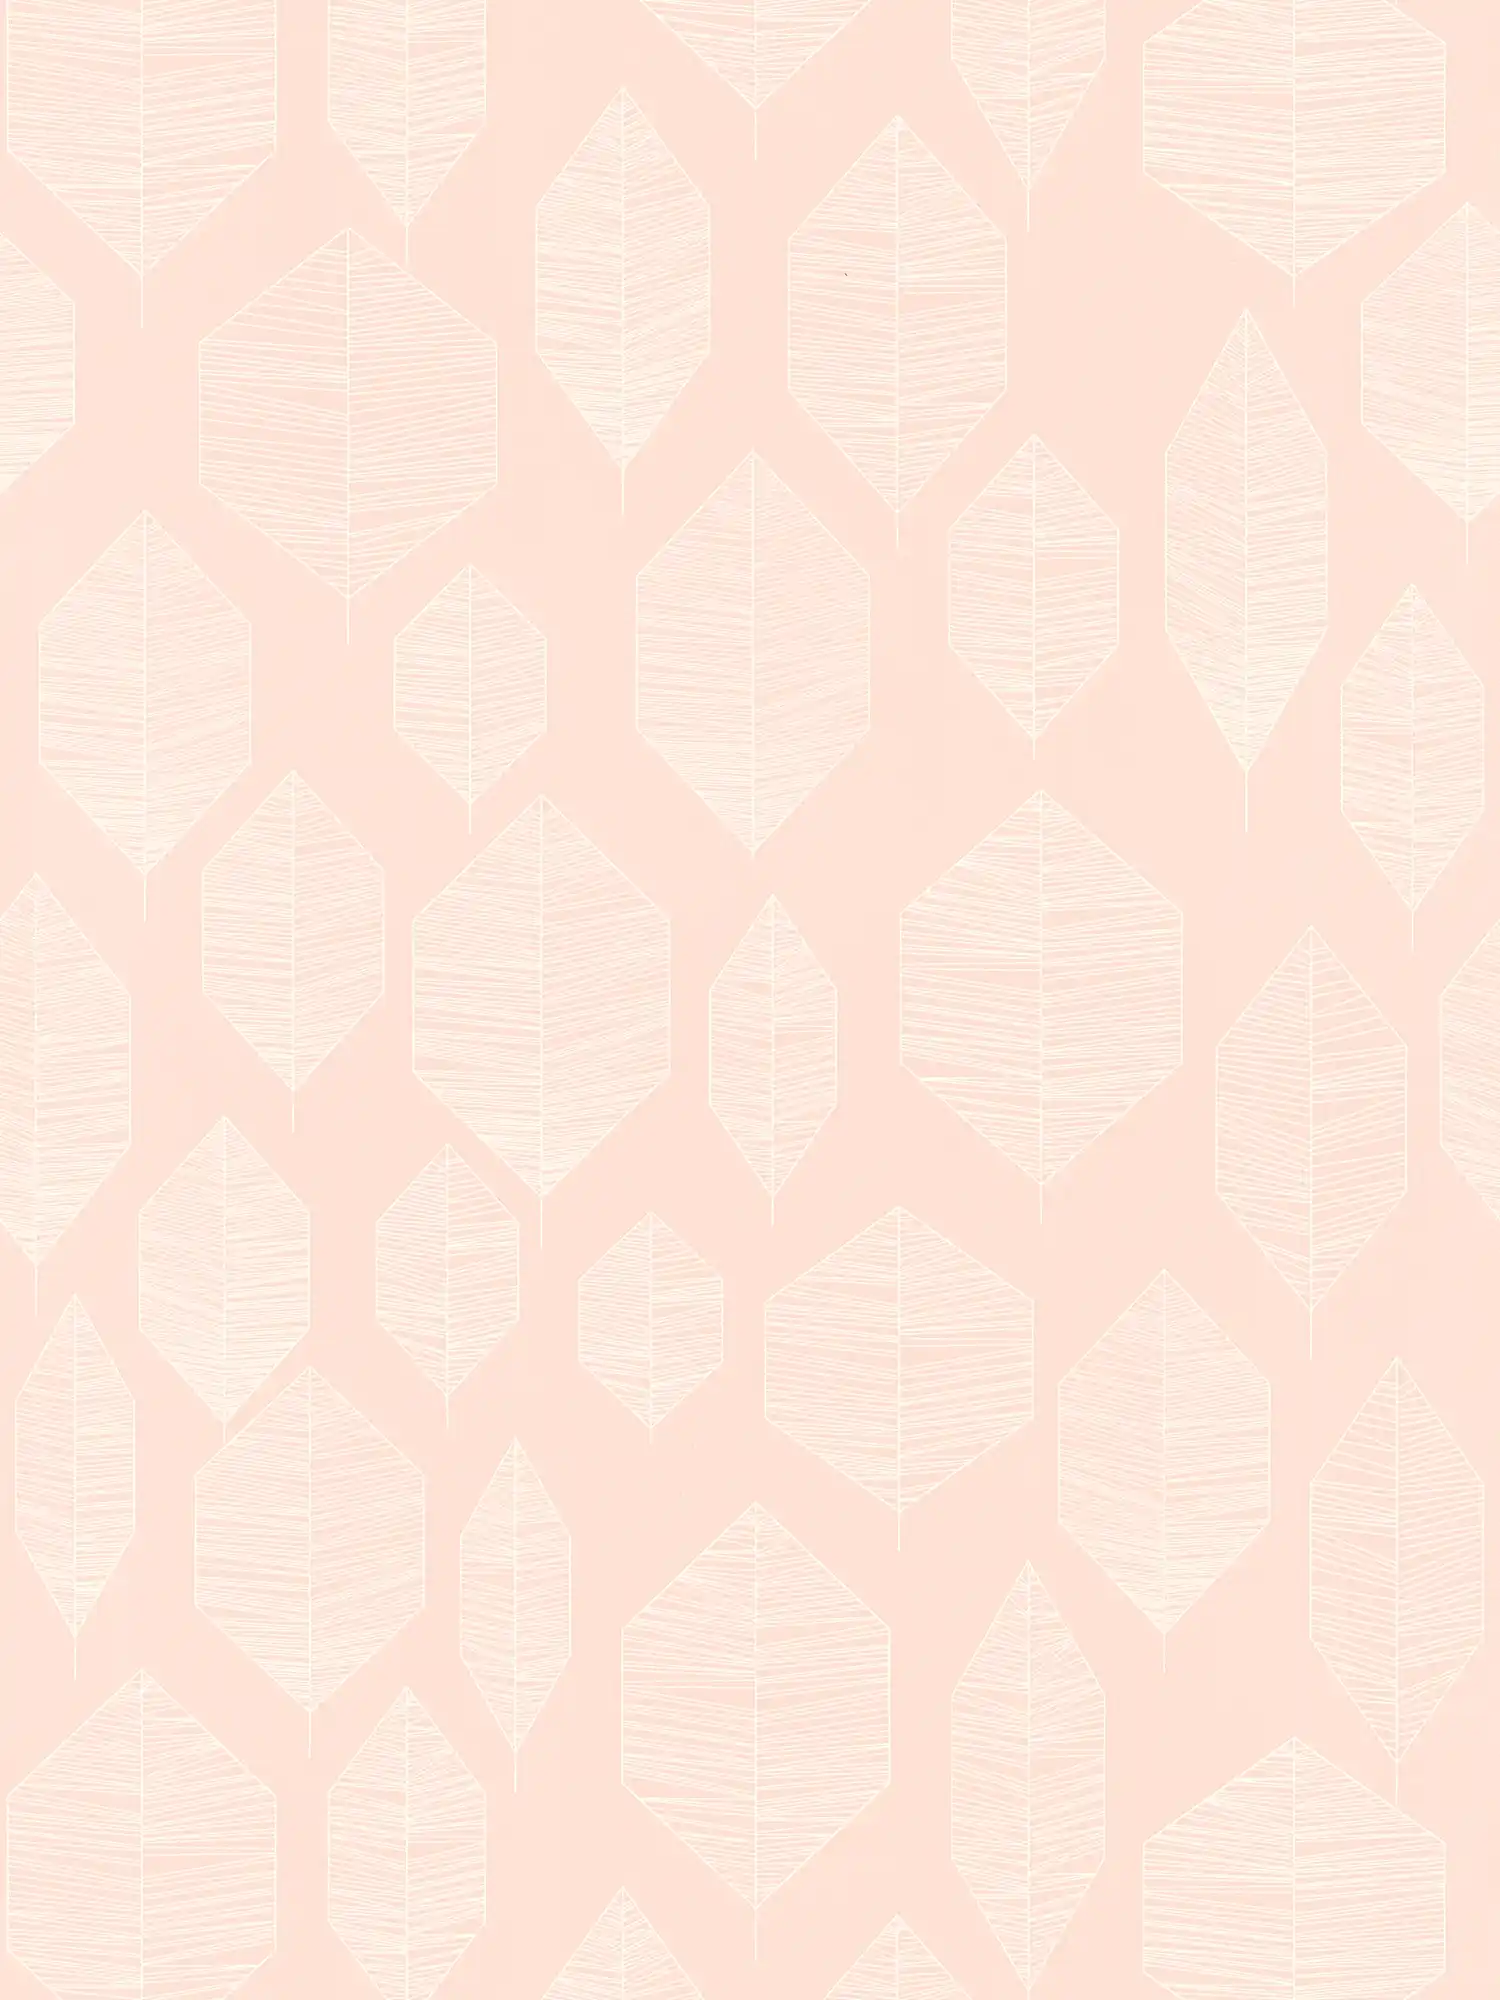             Scandinavian design wallpaper with leaves pattern - pink
        